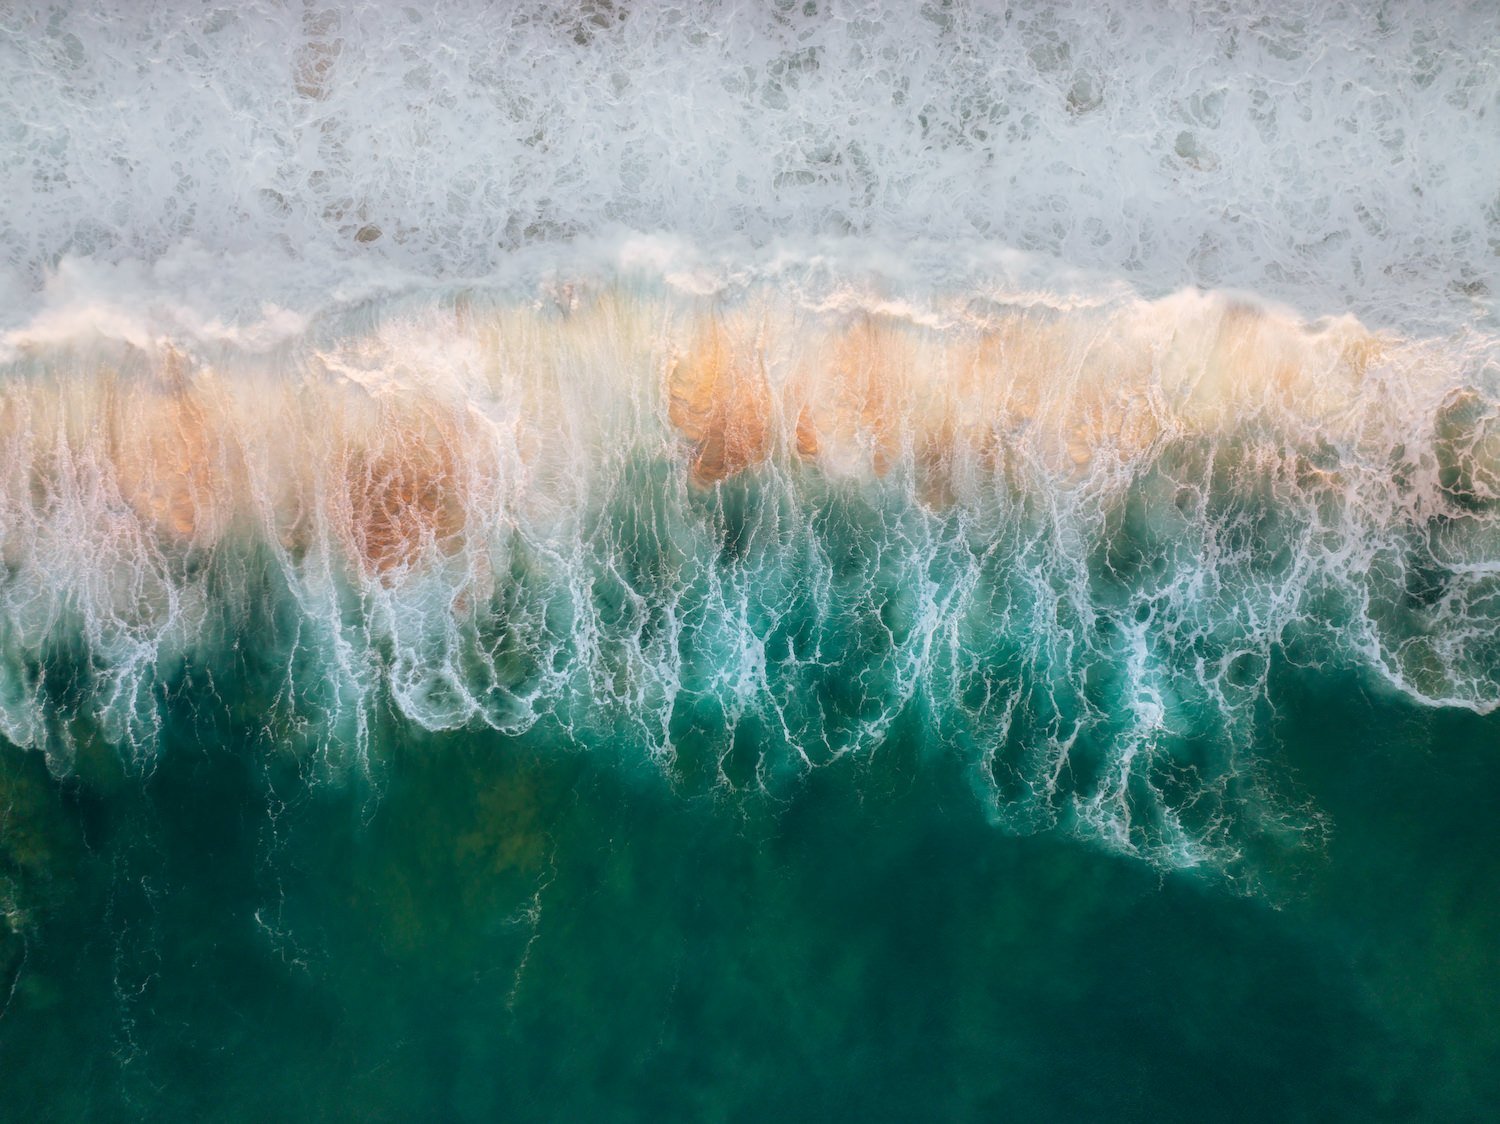 The Wave - Phillip Island | Premium Framed Print - Peter Yan Studio